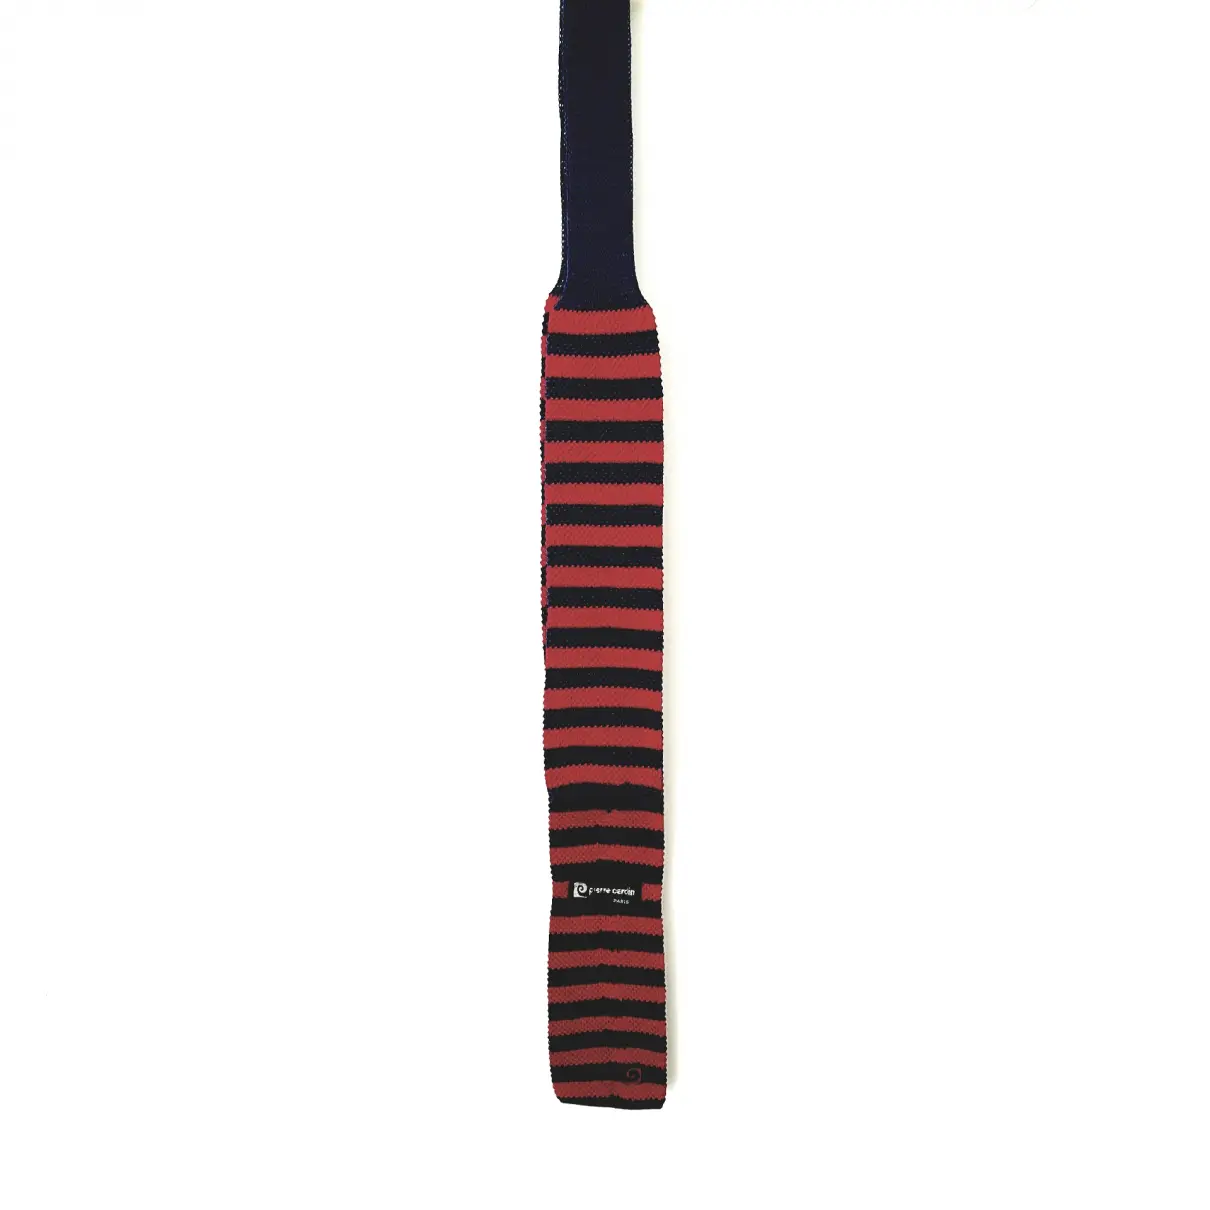 Buy Pierre Cardin Tie online - Vintage